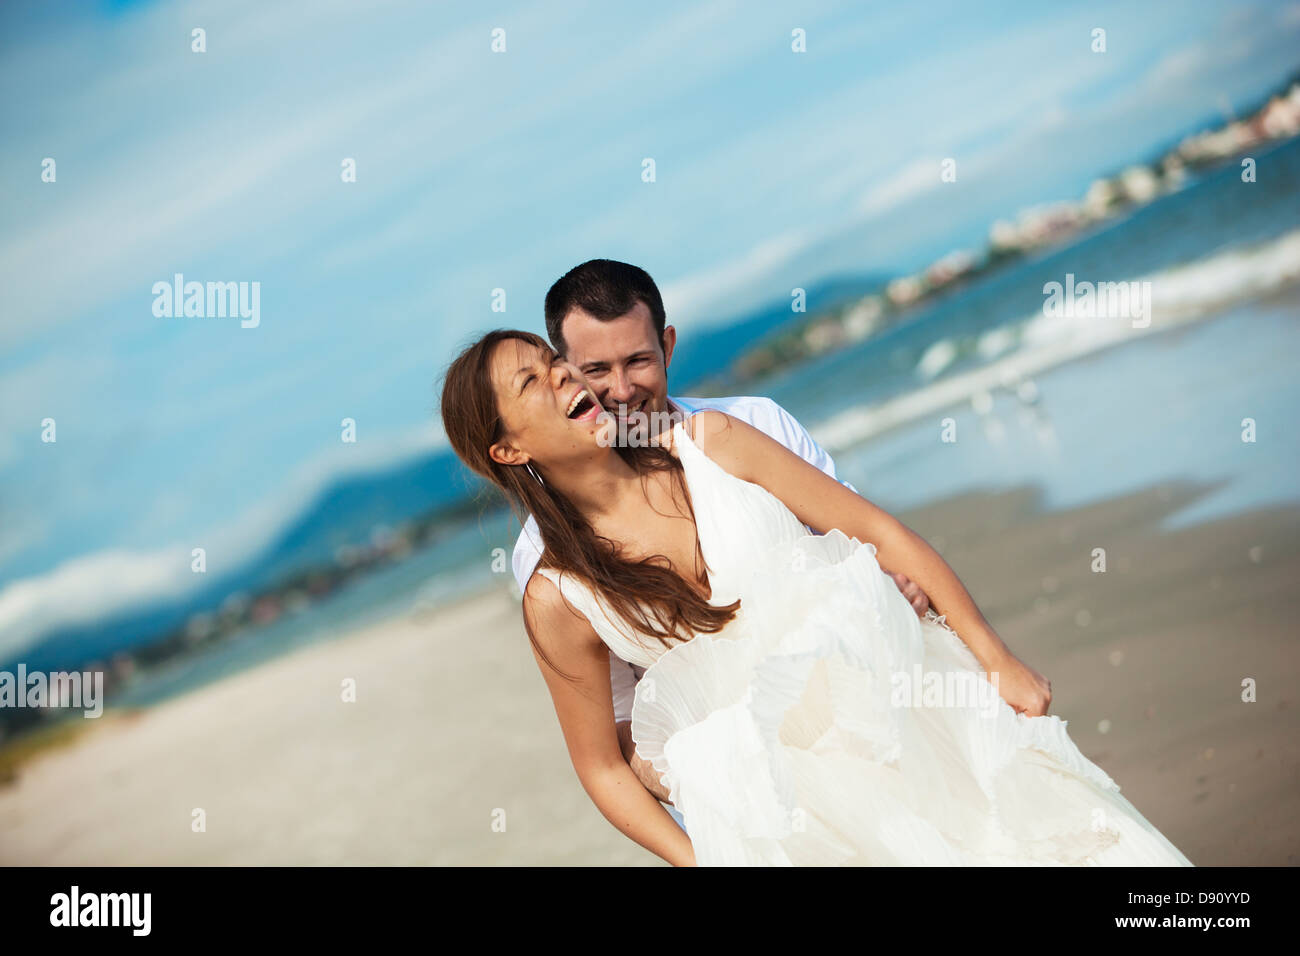 Newlywed couple embracing on beach Stock Photo